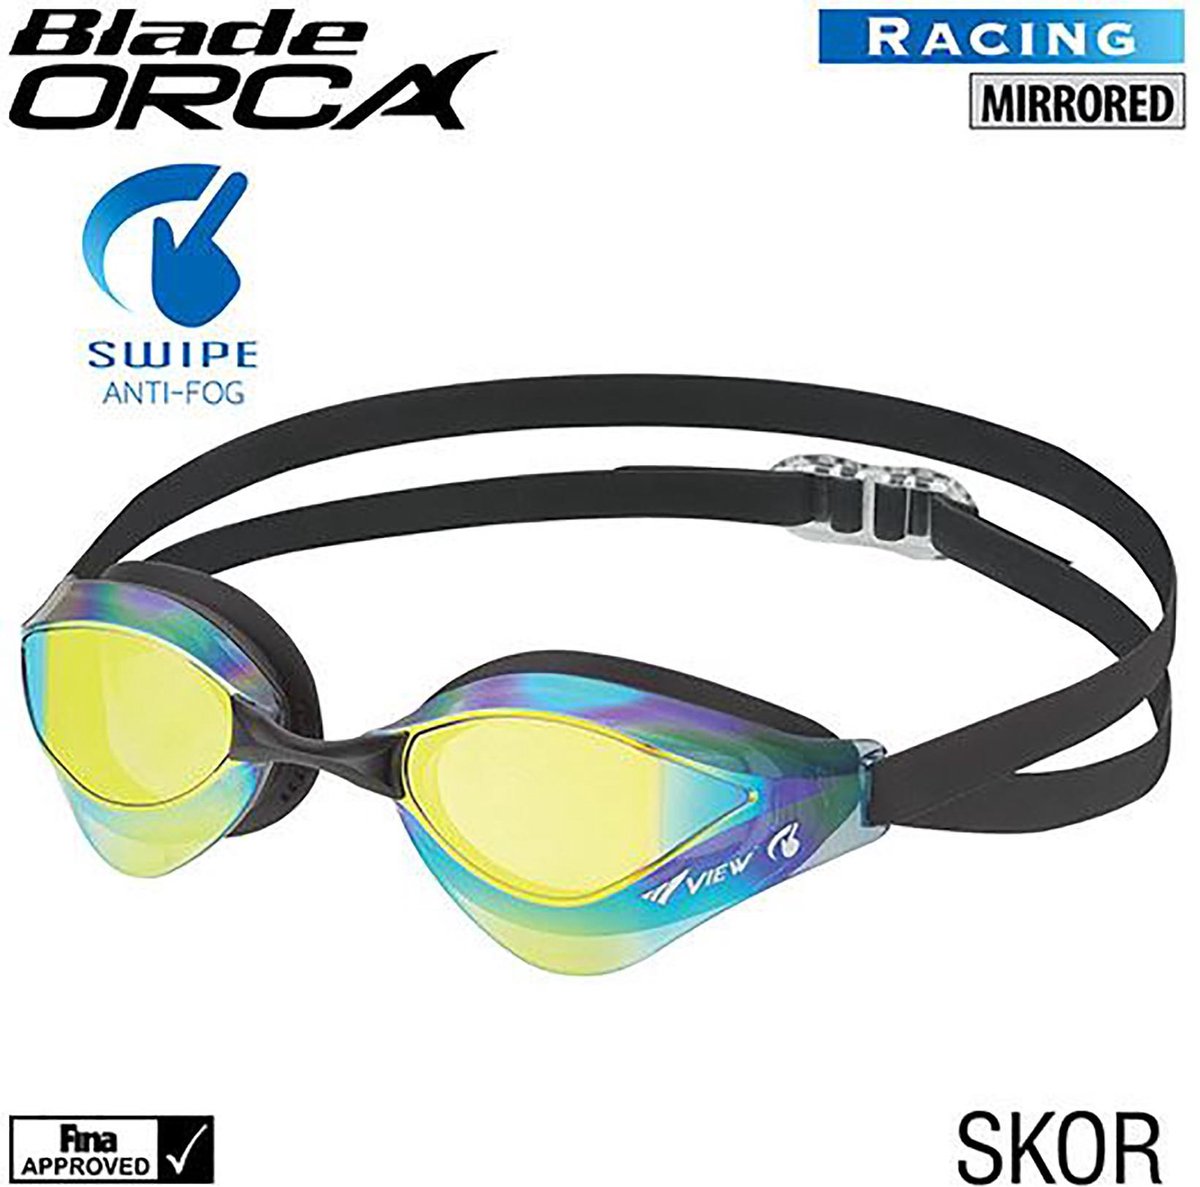 VIEW Blade Orca Racing Mirrored zwembril met SWIPE technologie V230ASA-SKOR